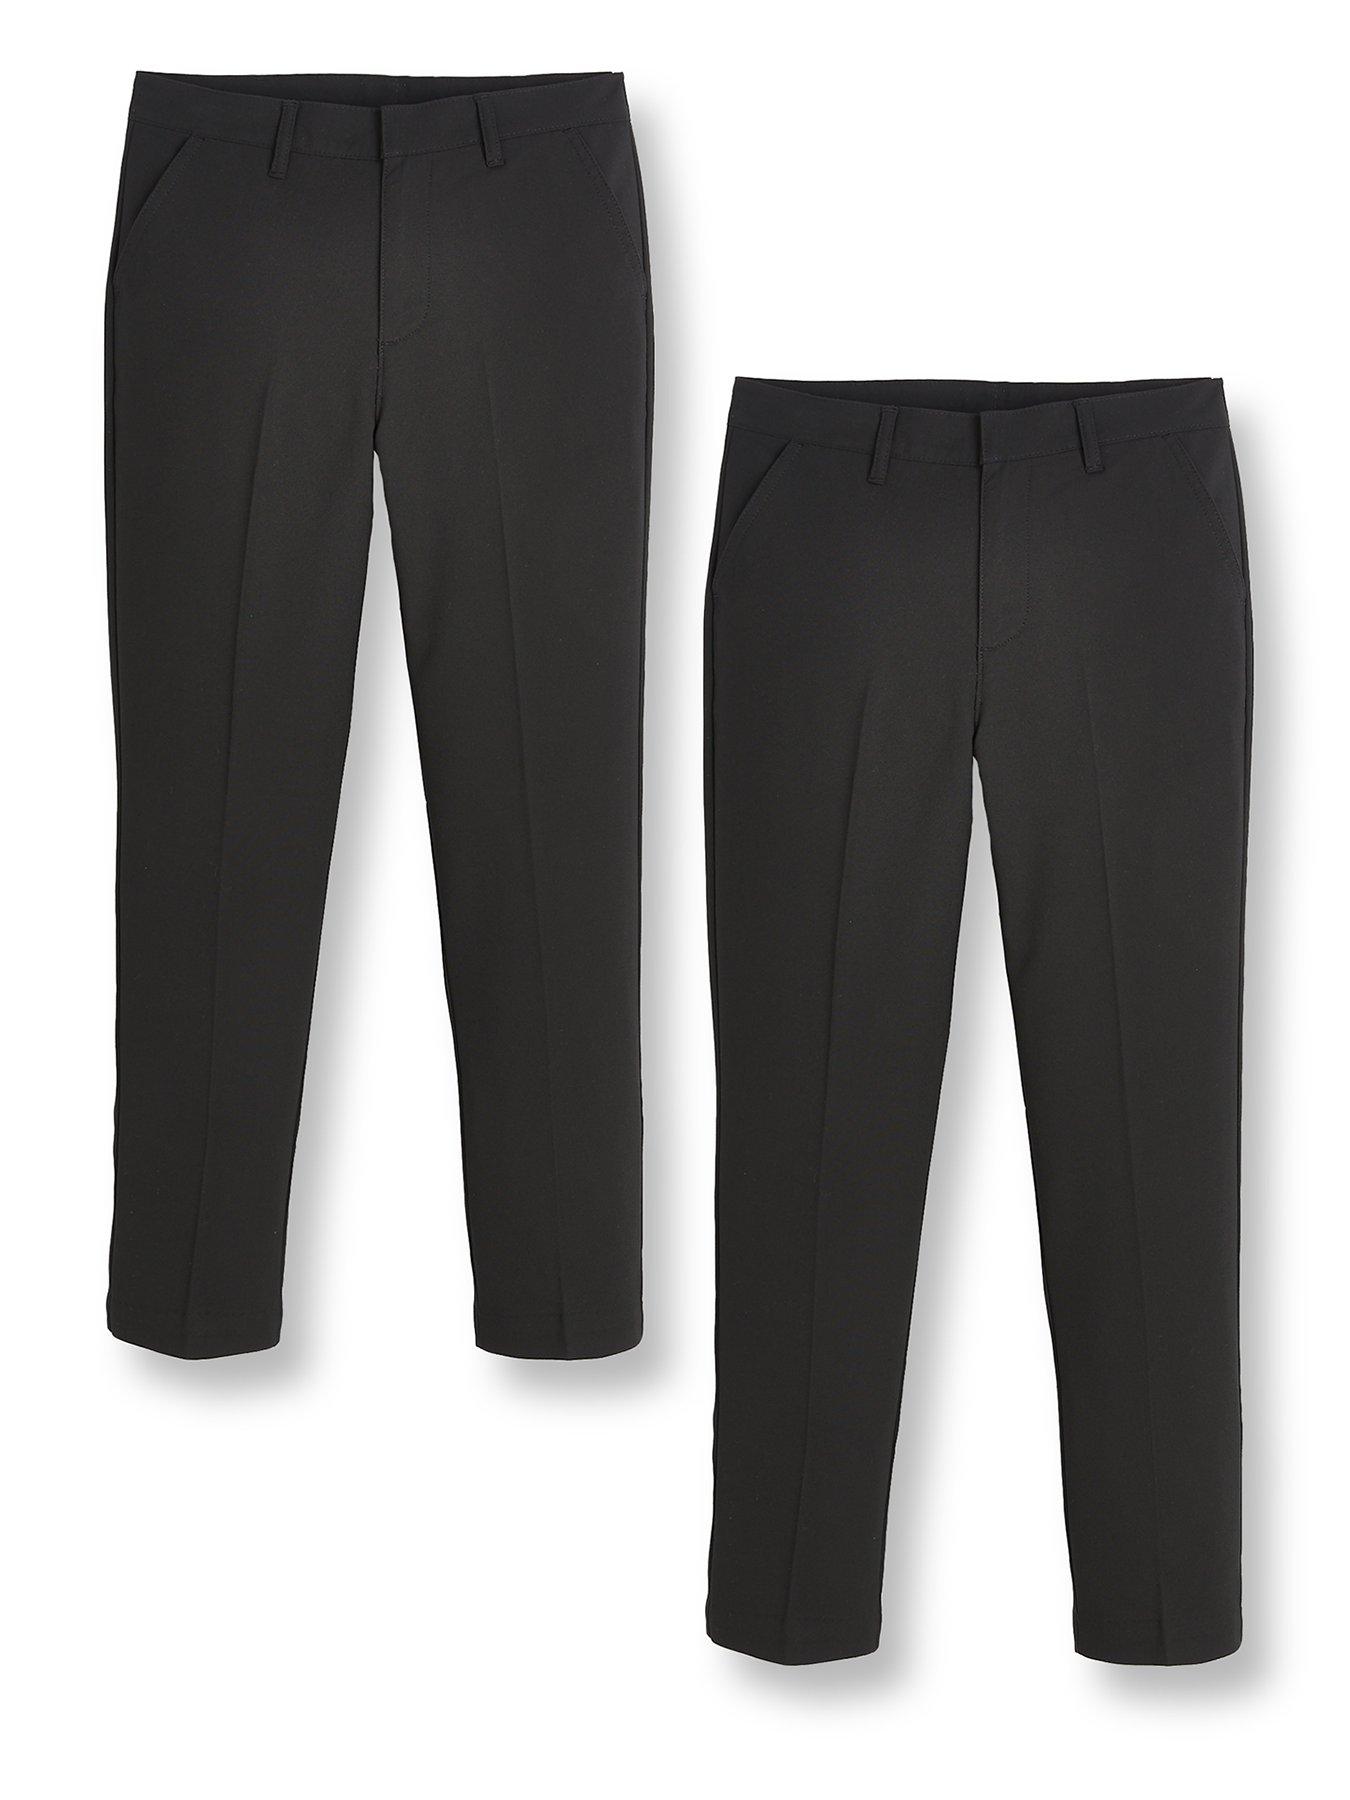 Nike Athletic Pants Women's Black Used L 995 - Locker Room Direct